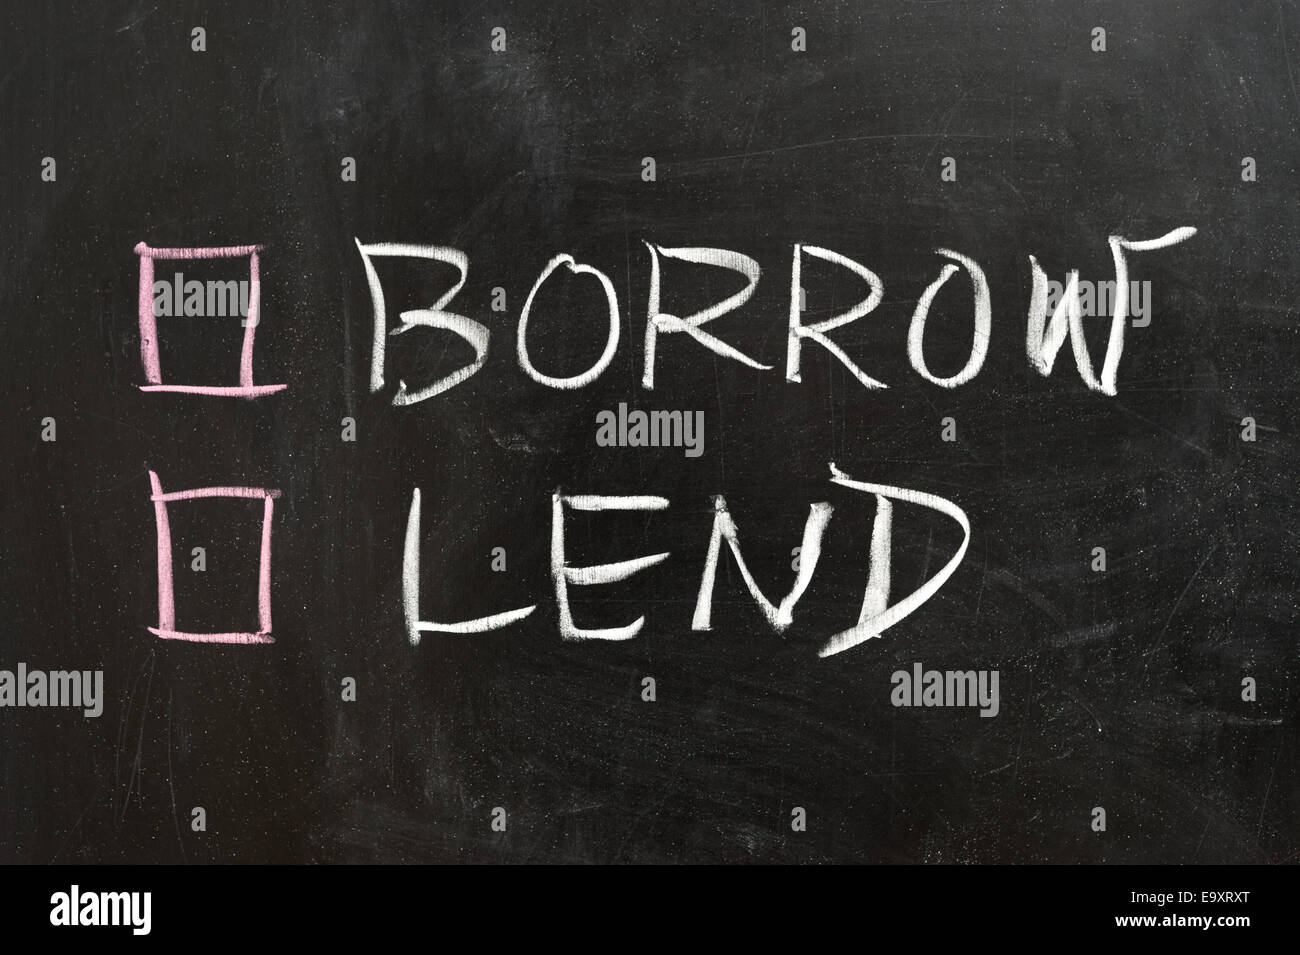 Borrow or lend options on the chalkboard Stock Photo